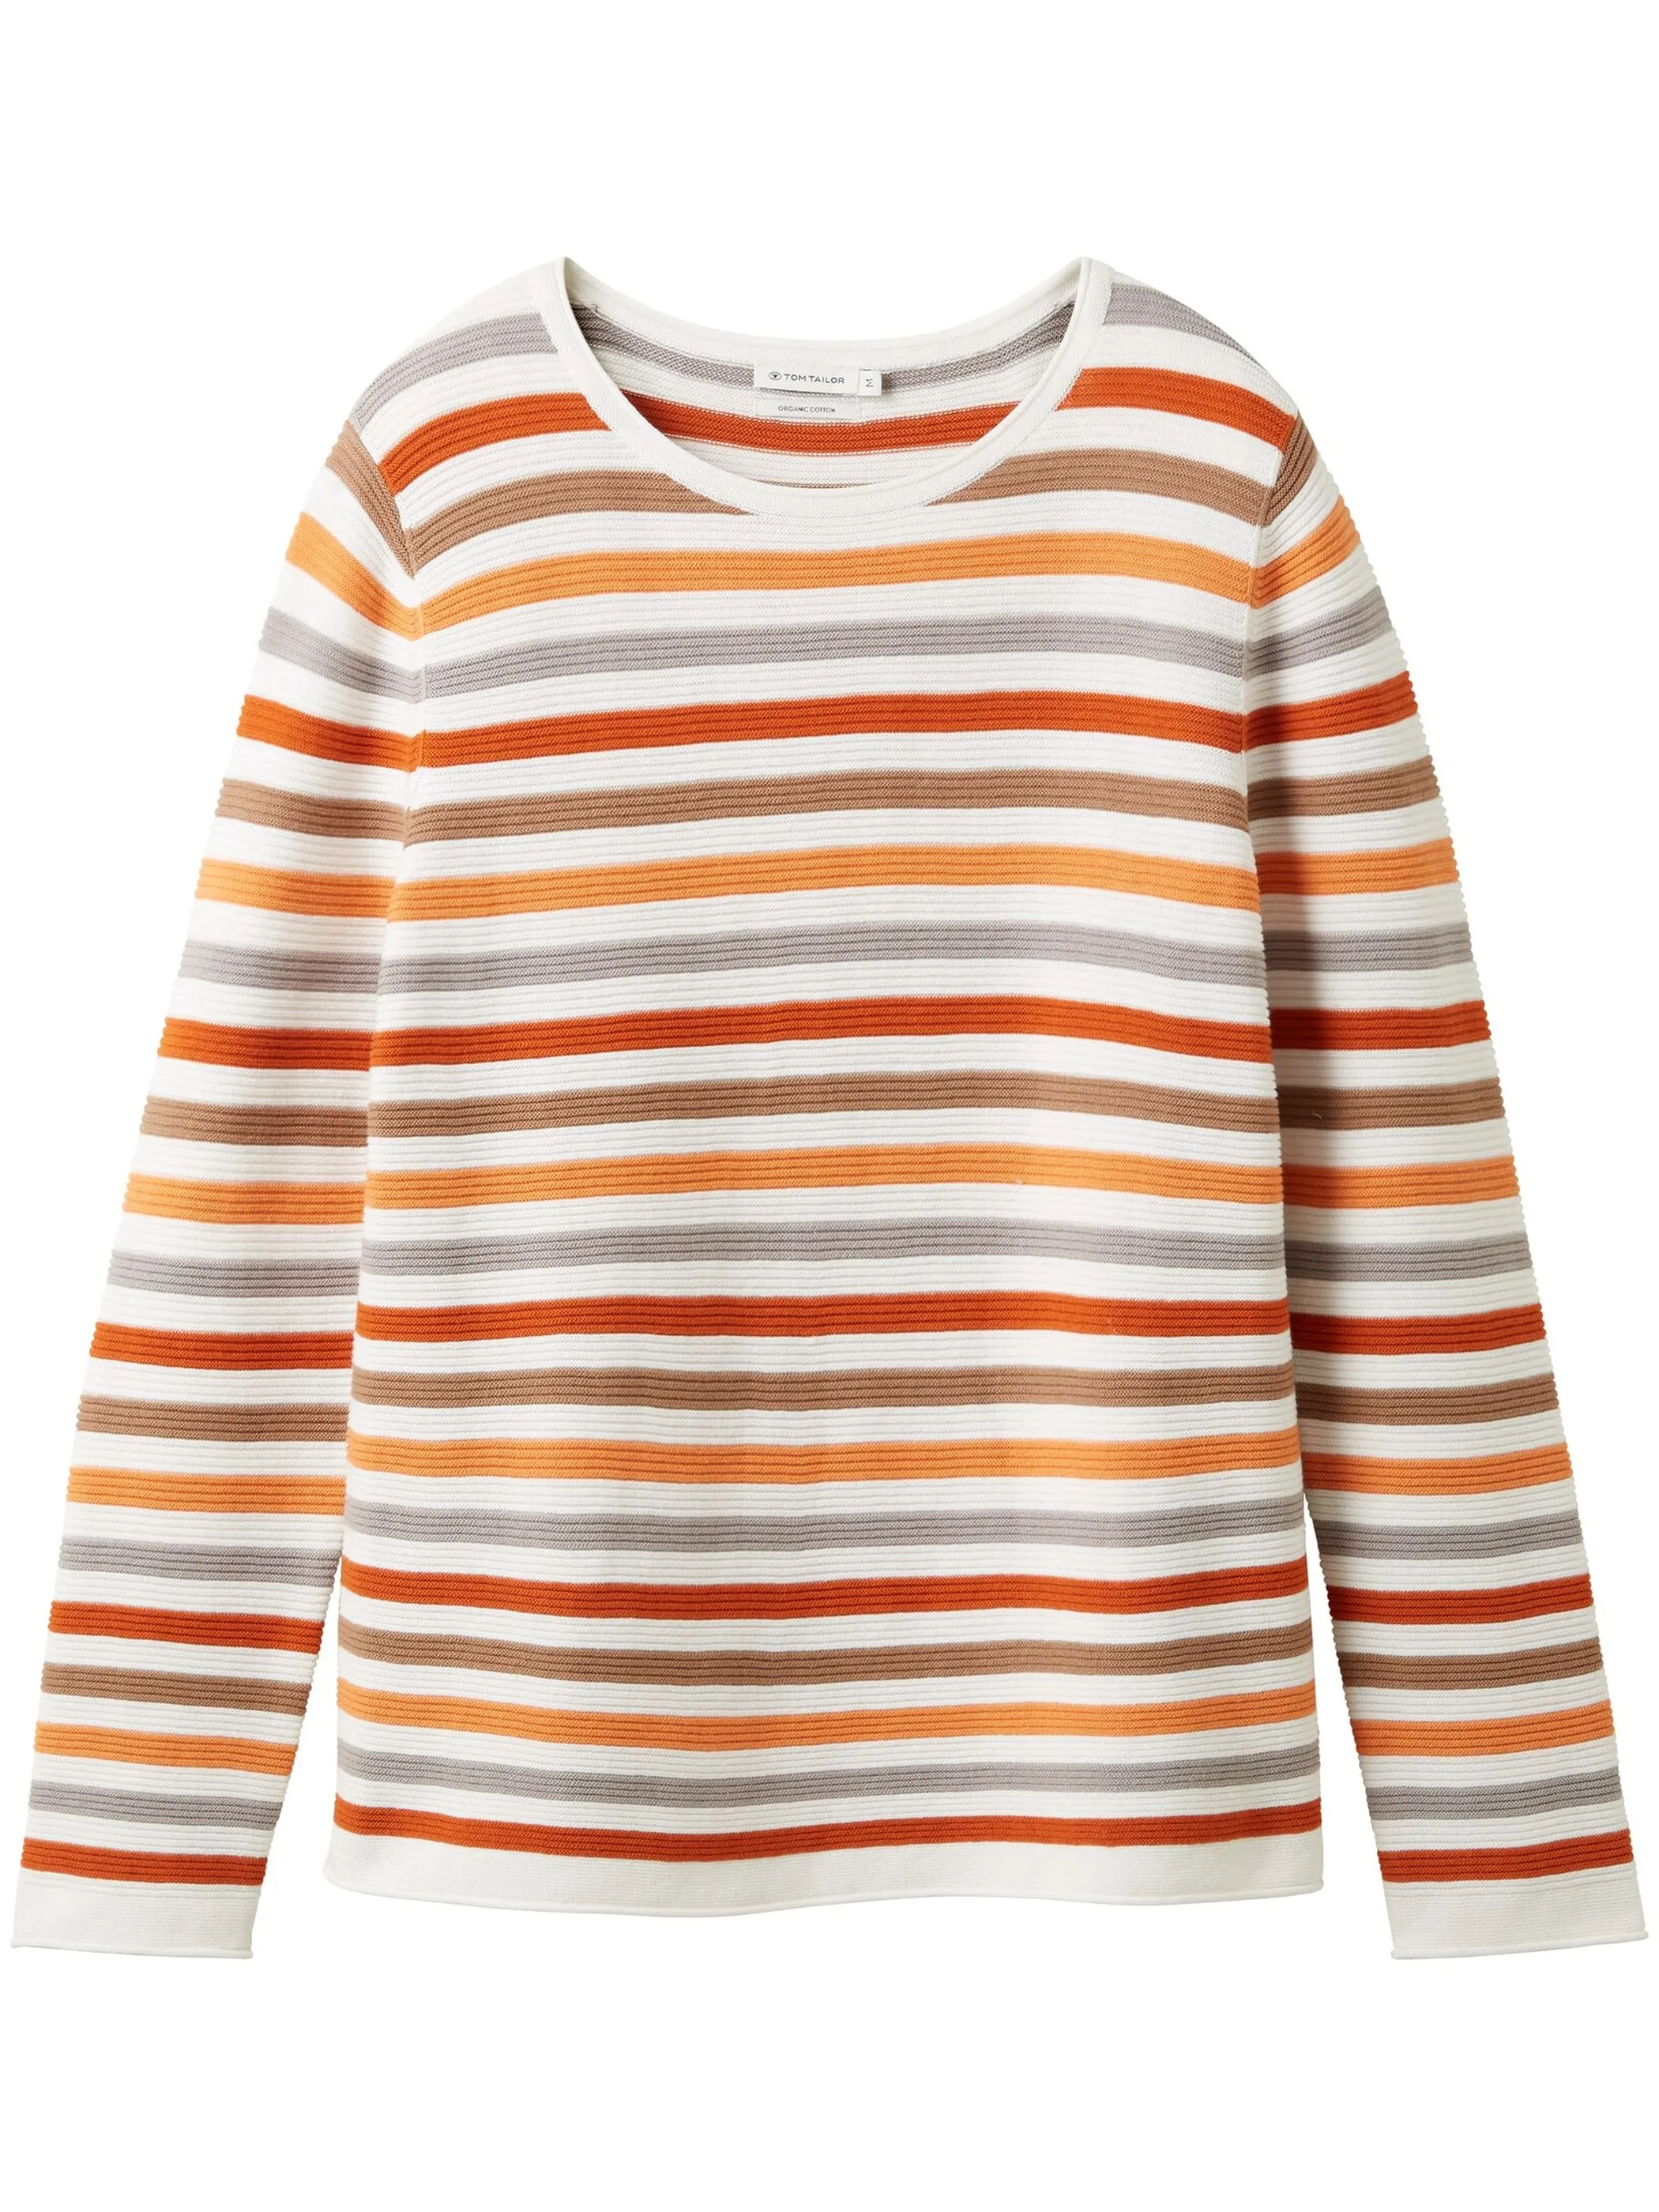 Tom Tailor 1016350 NOS sweater new ottoma Orange 827729 32441 1